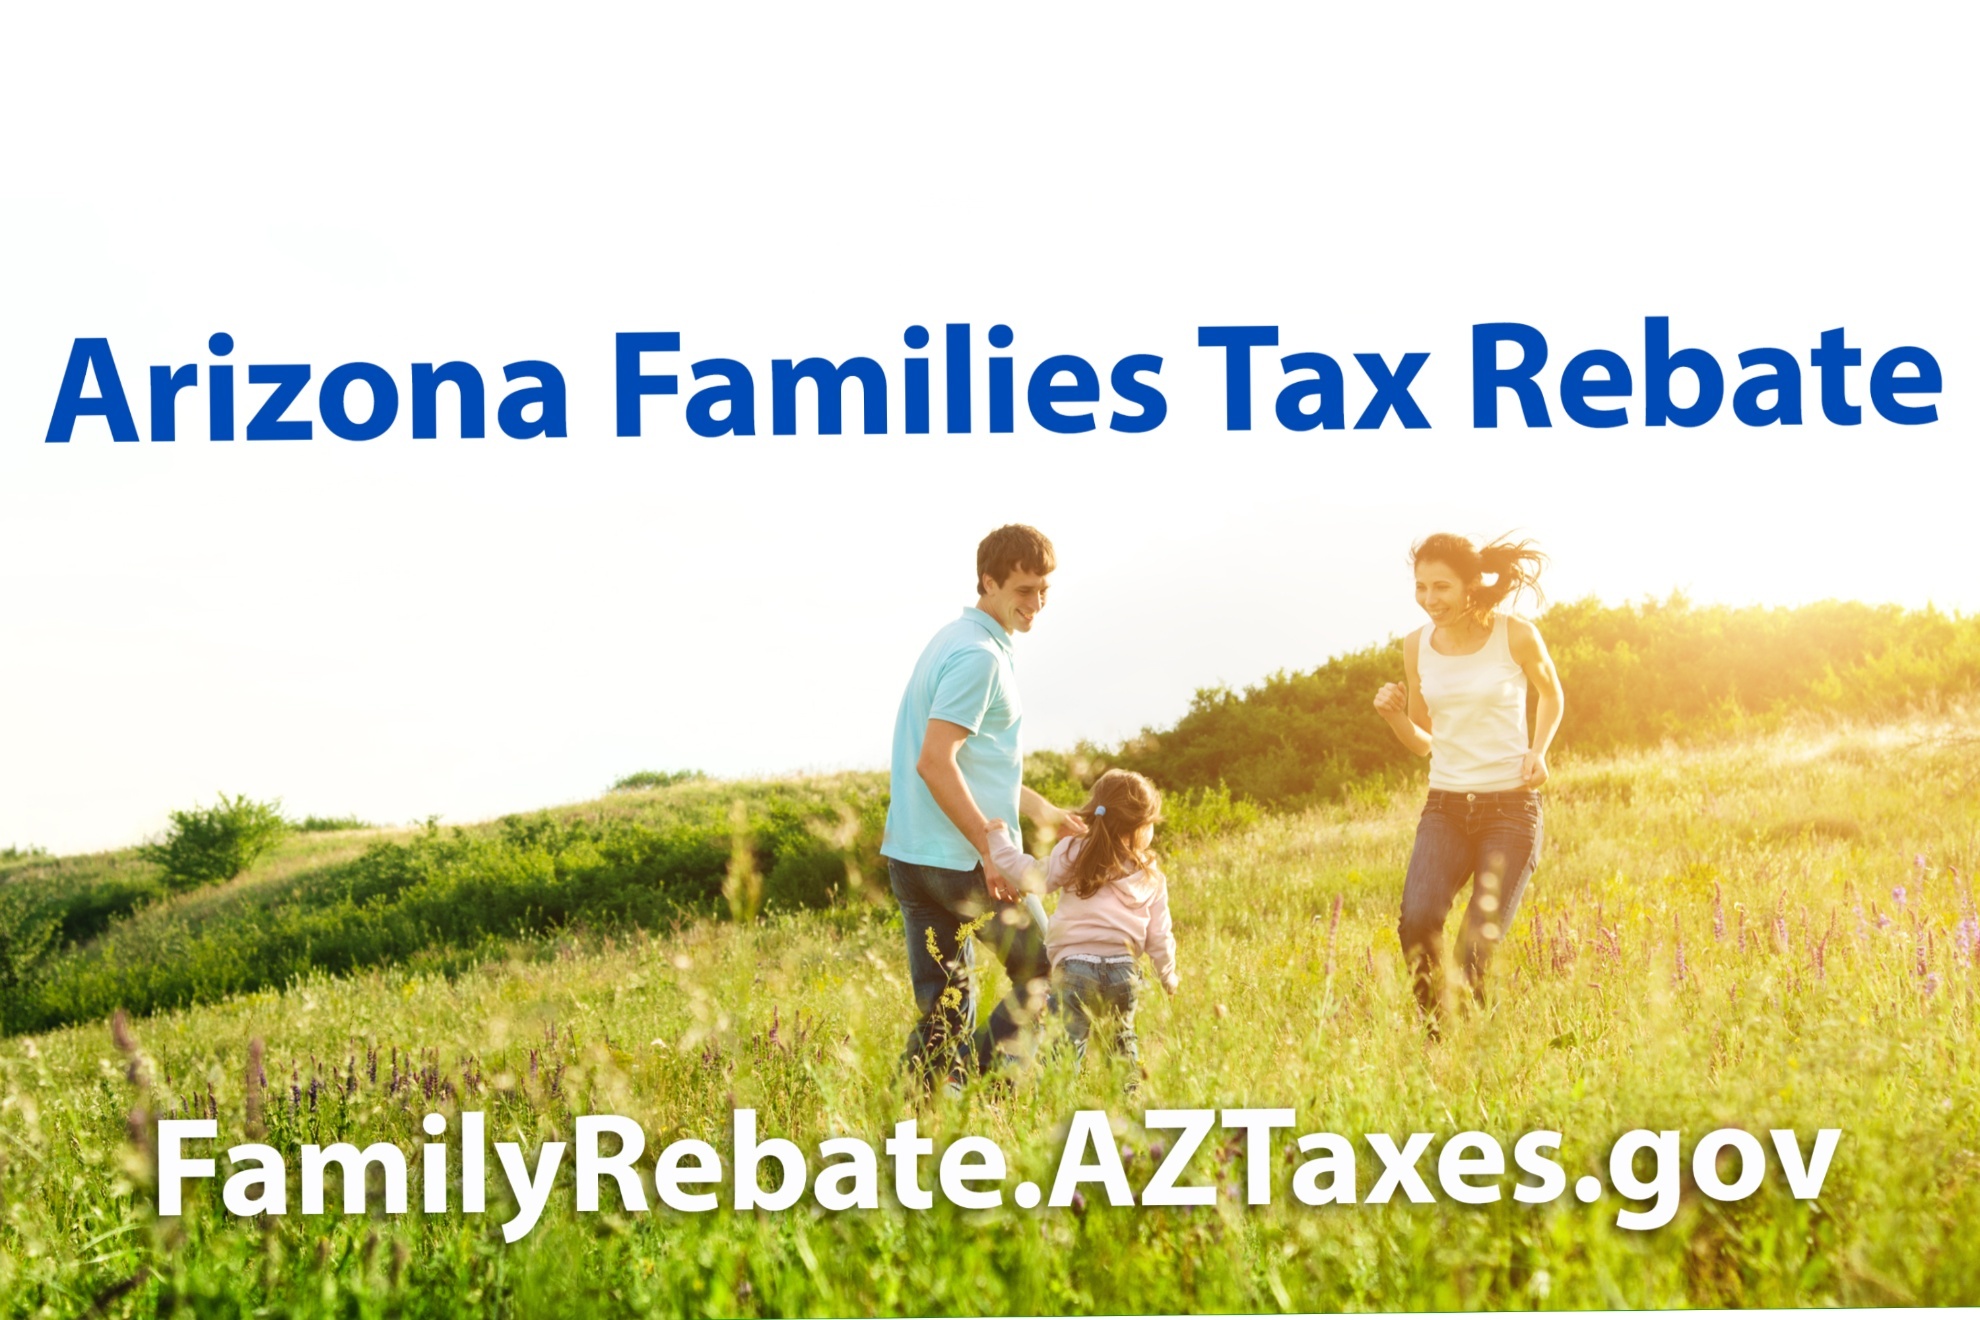 Arizona started sending its tax rebate on Nov. 15.